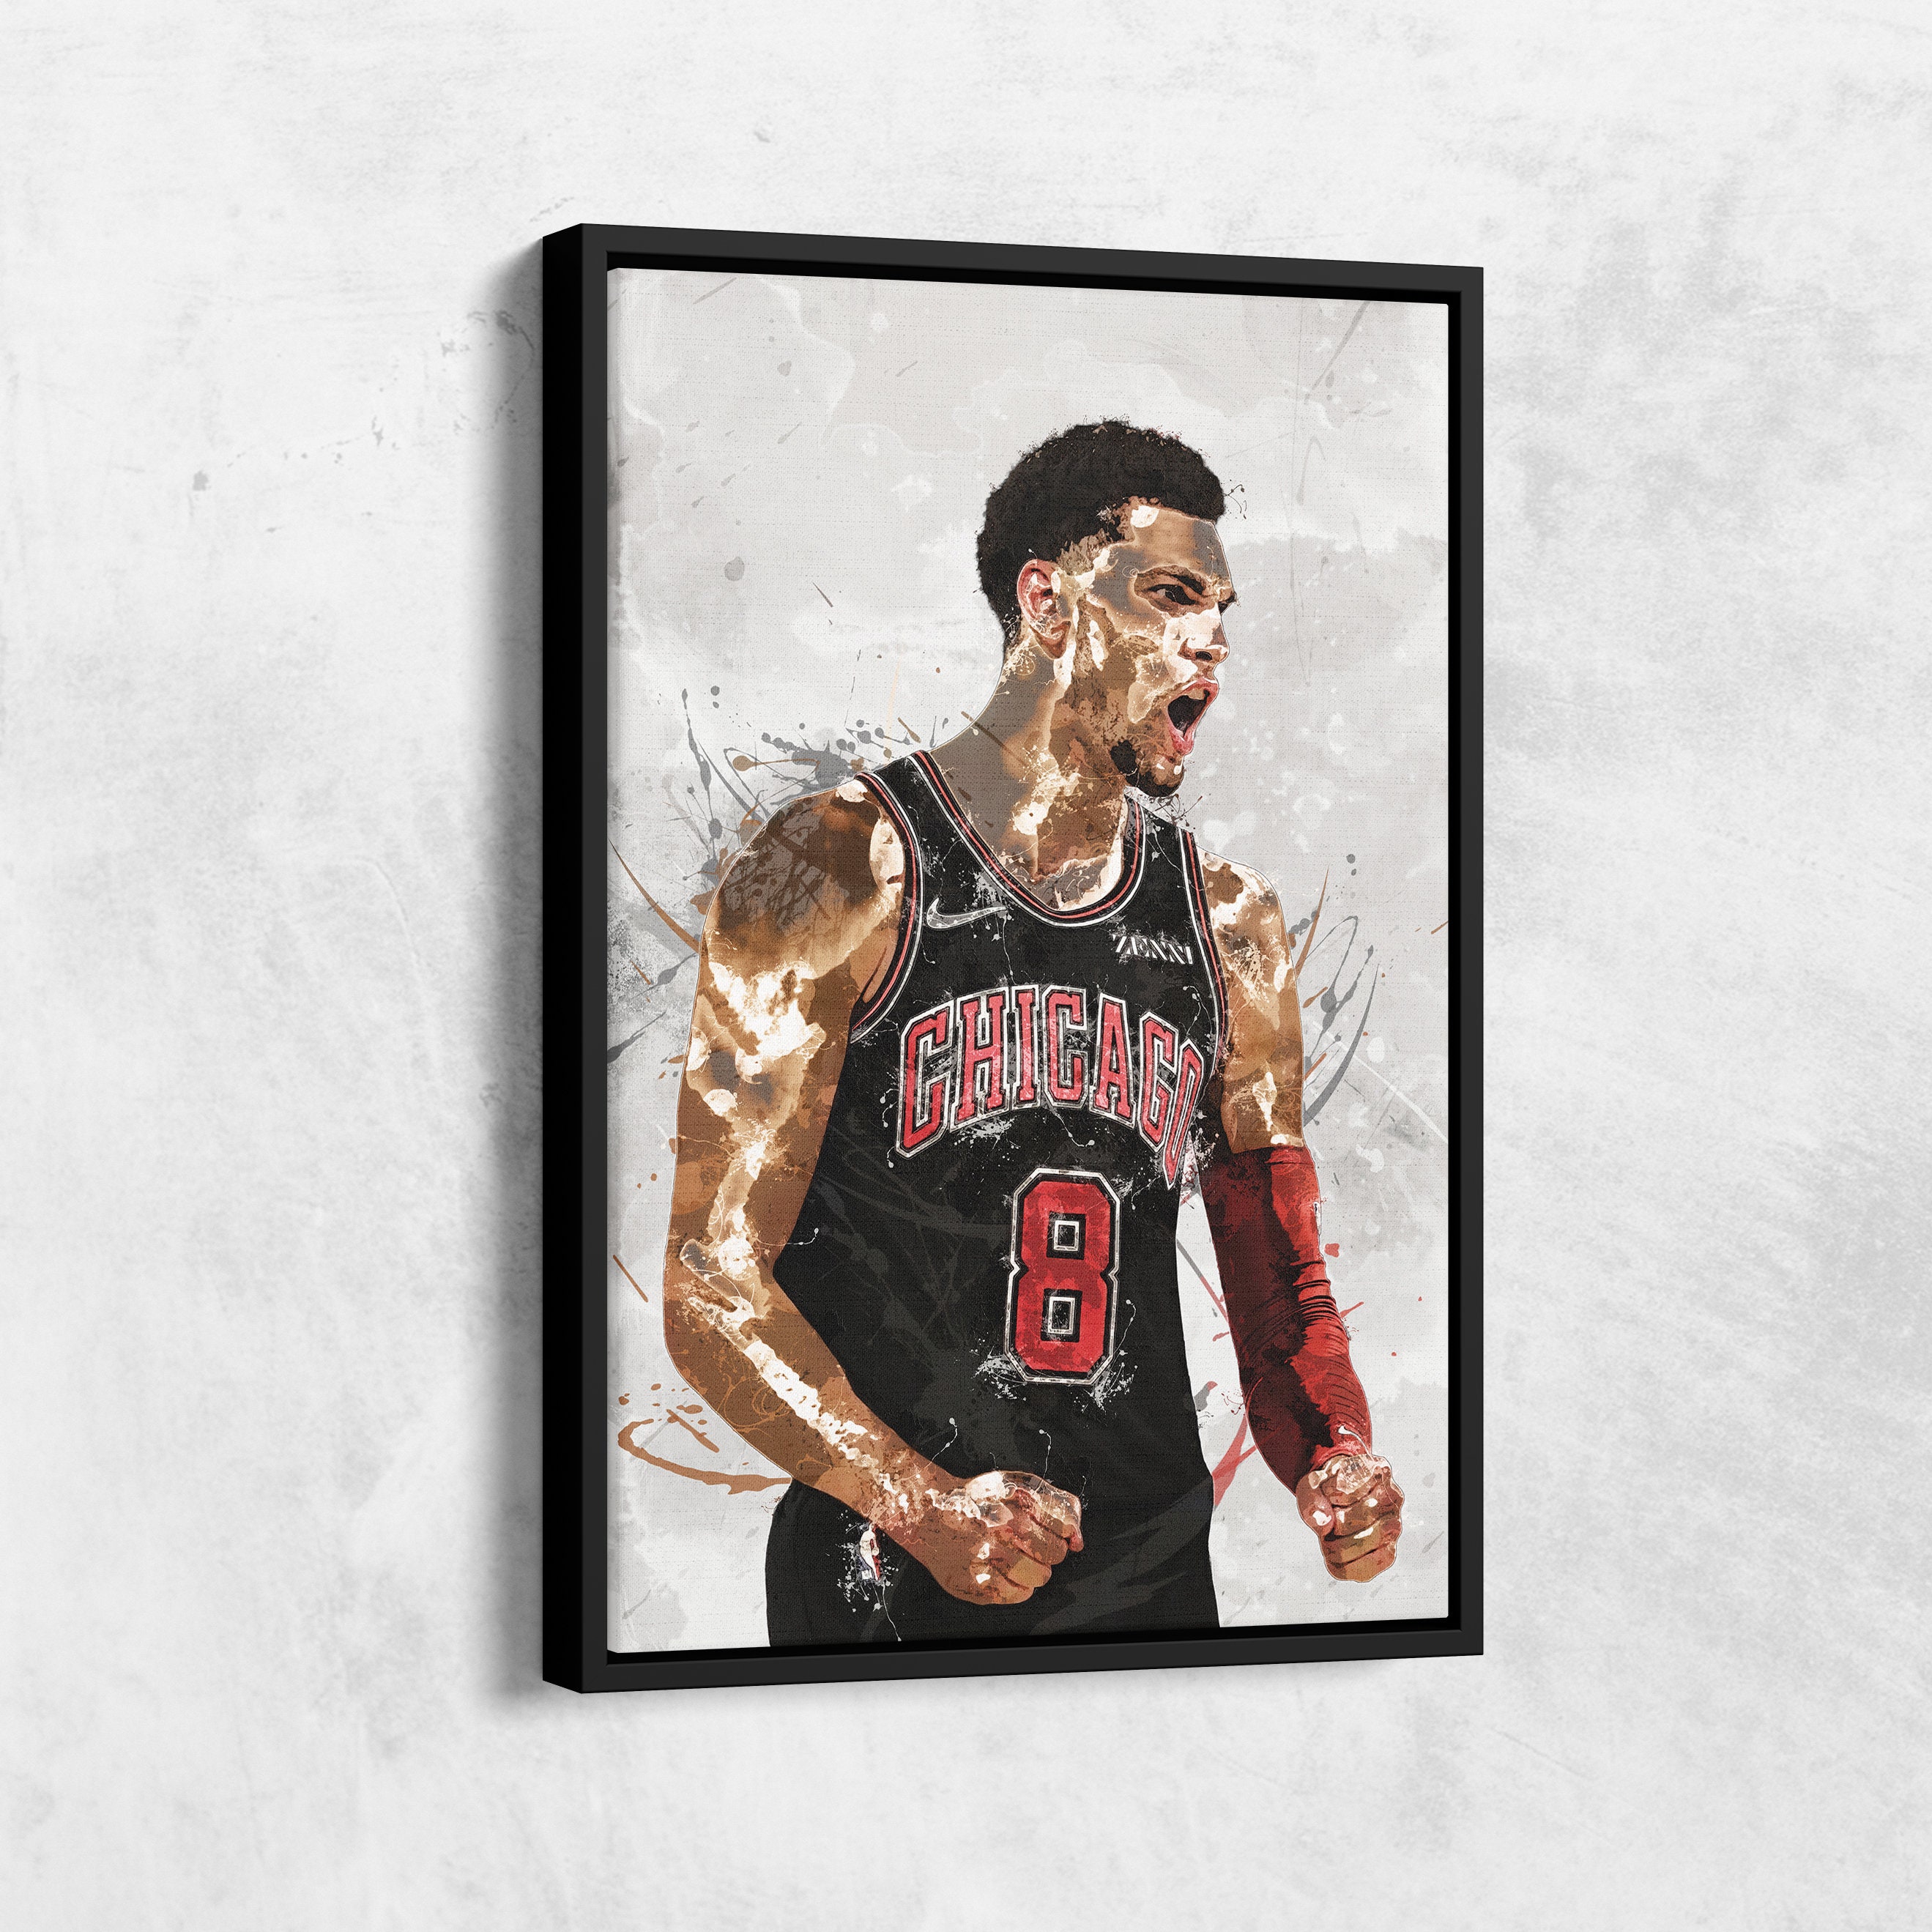 Michael Jordan Bulls 32x36 Custom Framed Jersey Display with 6 Time NBA  Champions Pin